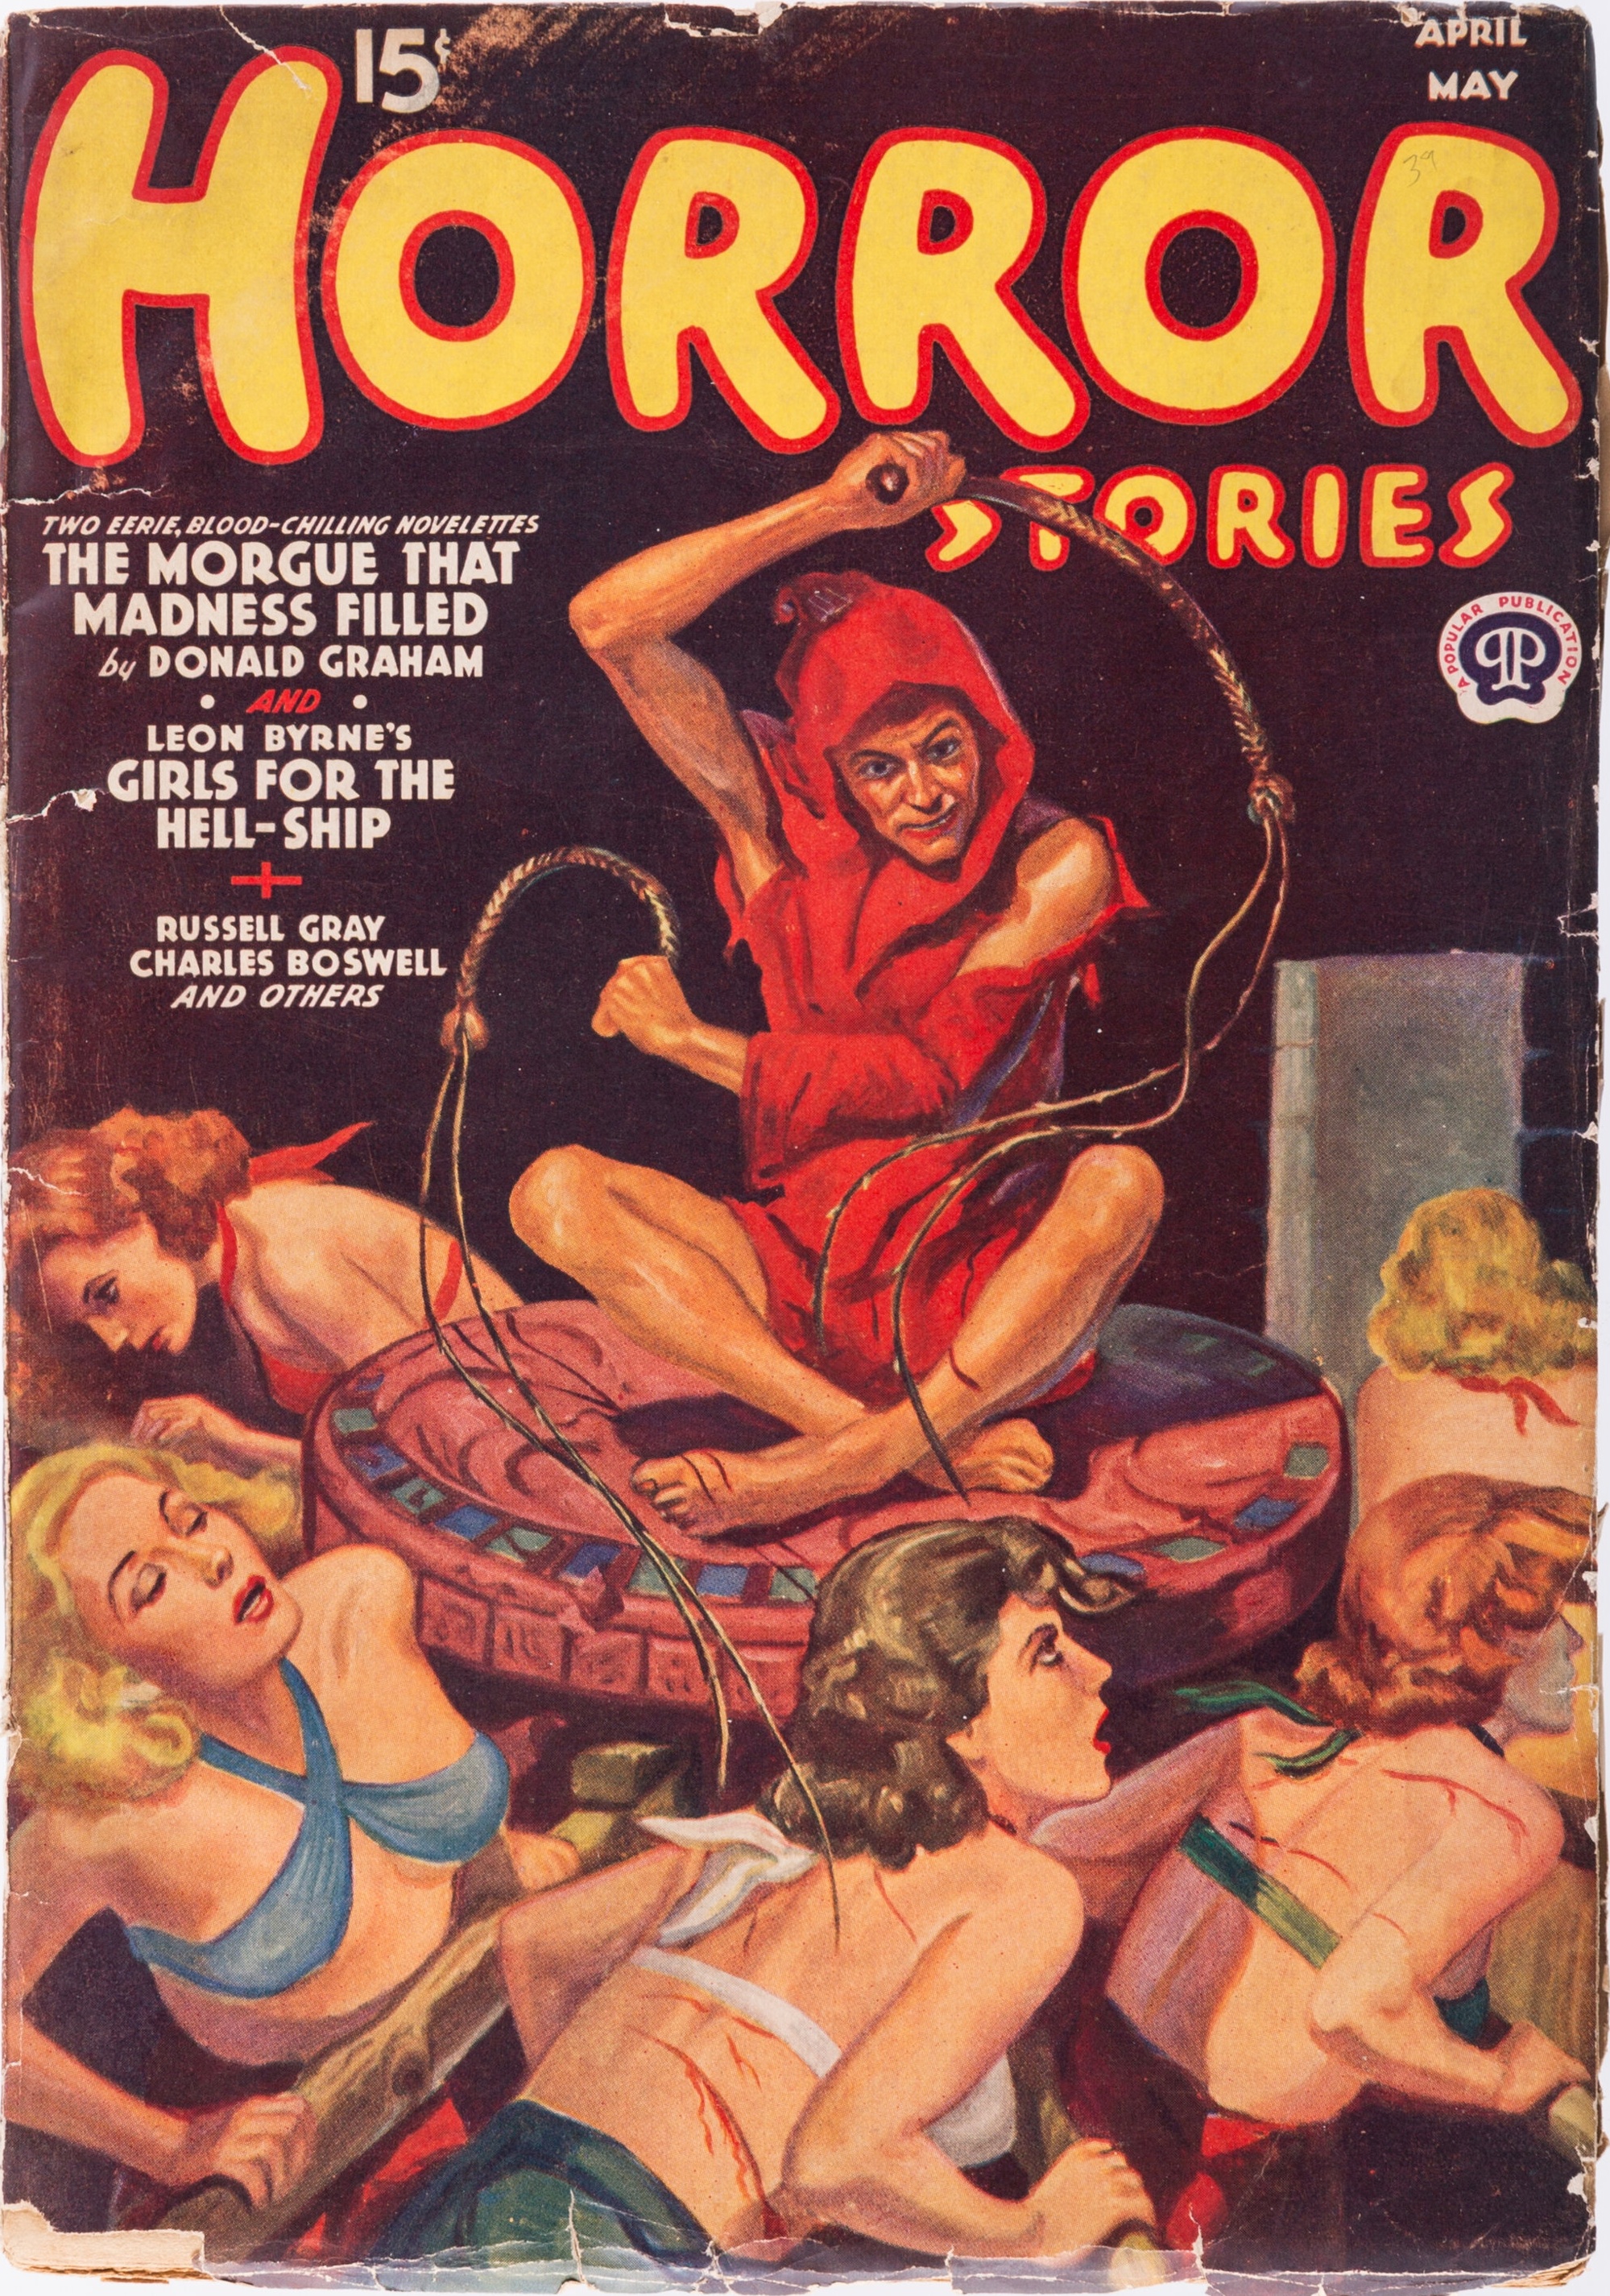 Horror Stories - April May 1939